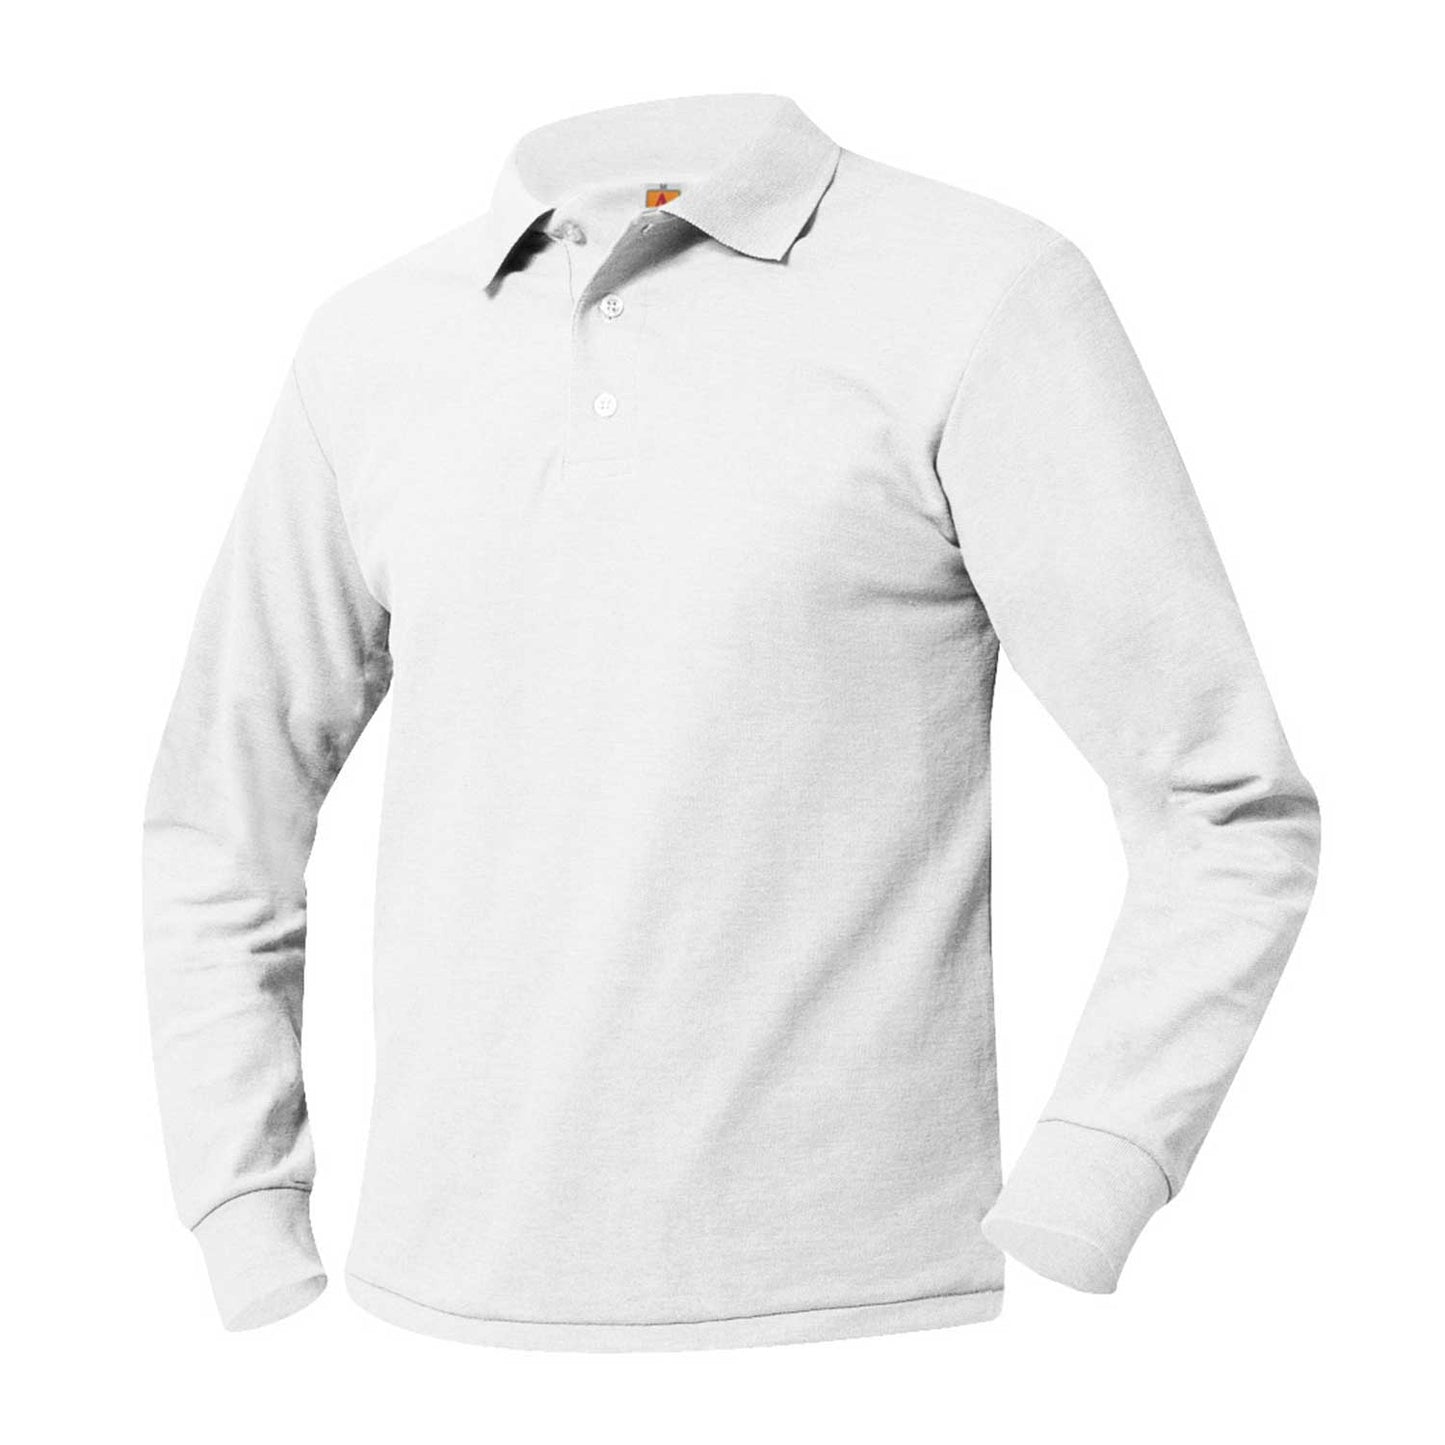 Unisex Pique Polo Shirt, Long Sleeves, Ribbed Cuffs w/Logo - 1105